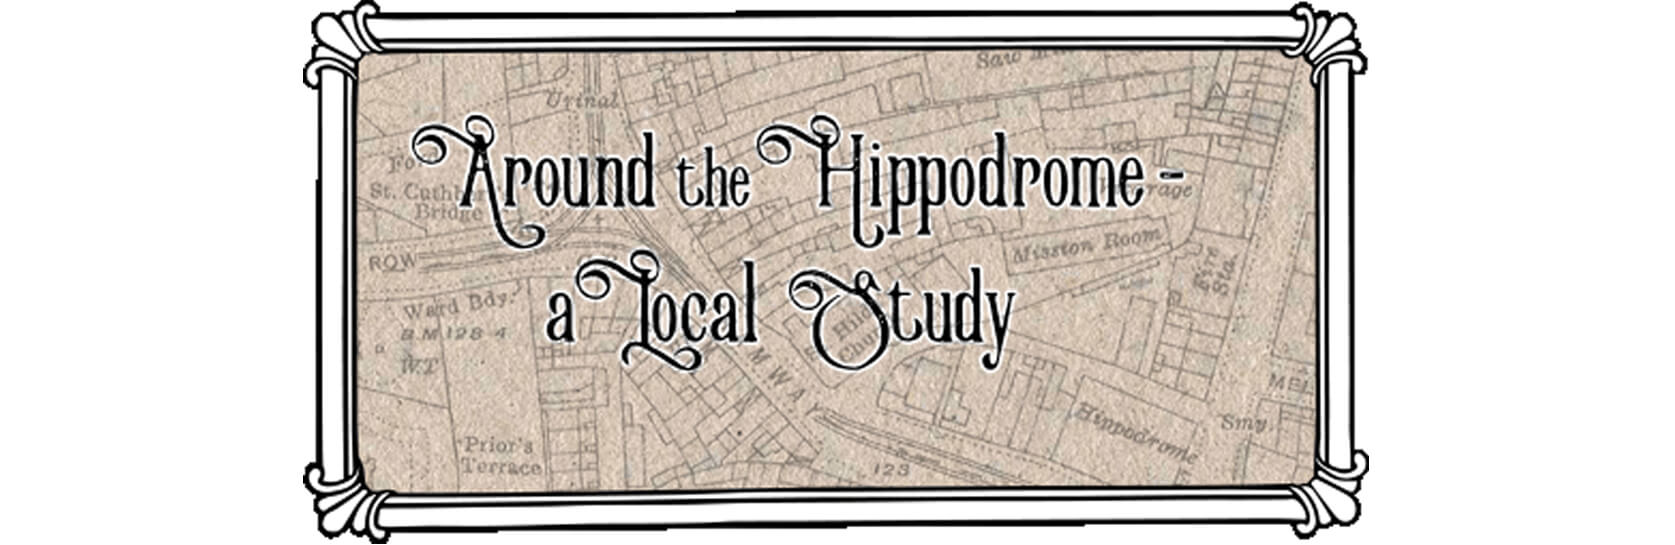 Darlington Hippodrome Read and Explain - Topic 4 - Around the Hippodrome - A Local Study